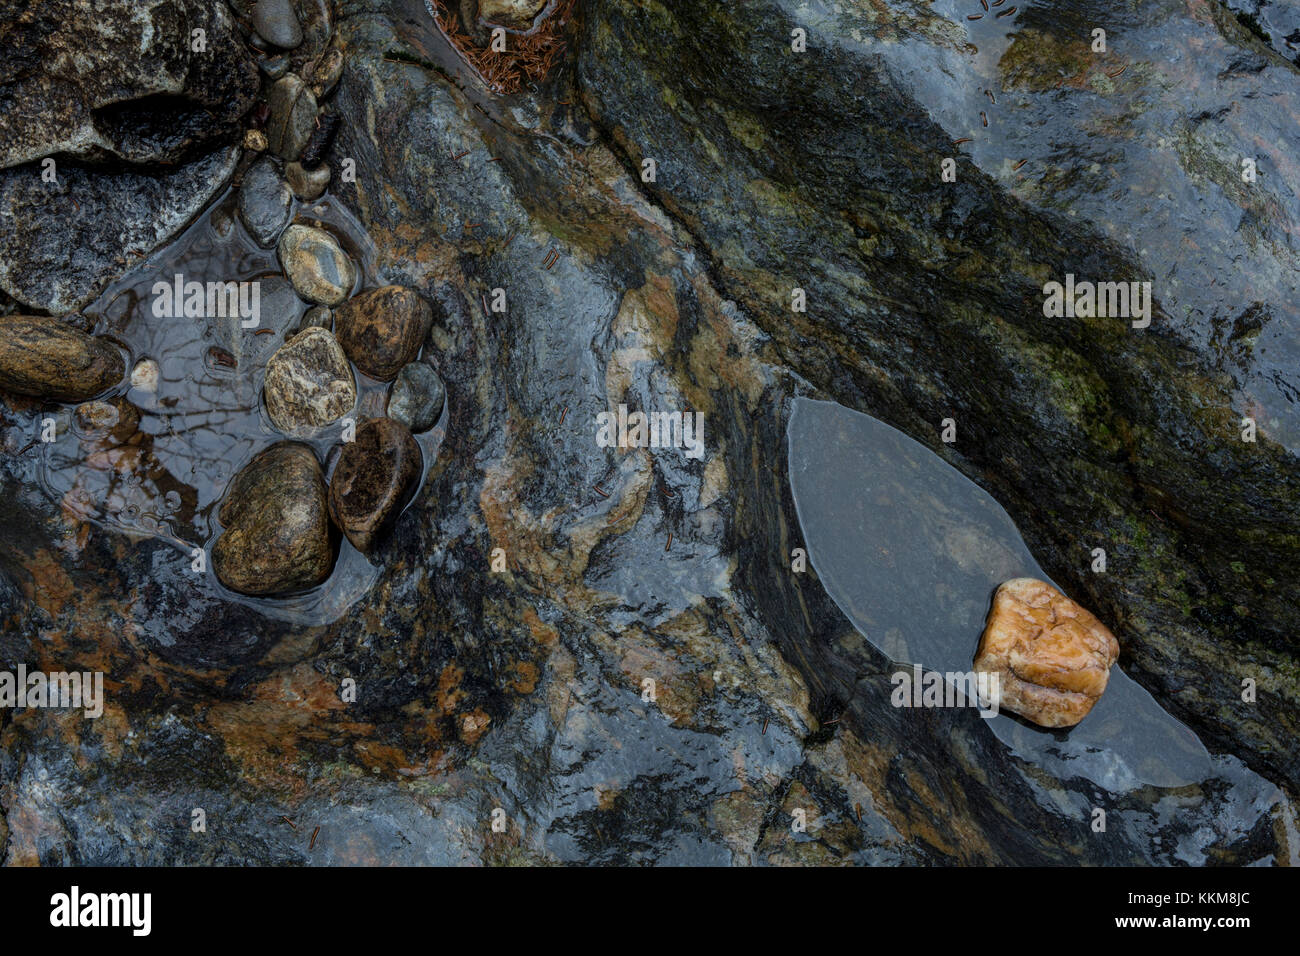 Le pietre nel flusso in corso del schwarzer regen, foresta bavarese, in Baviera, Germania, Foto Stock